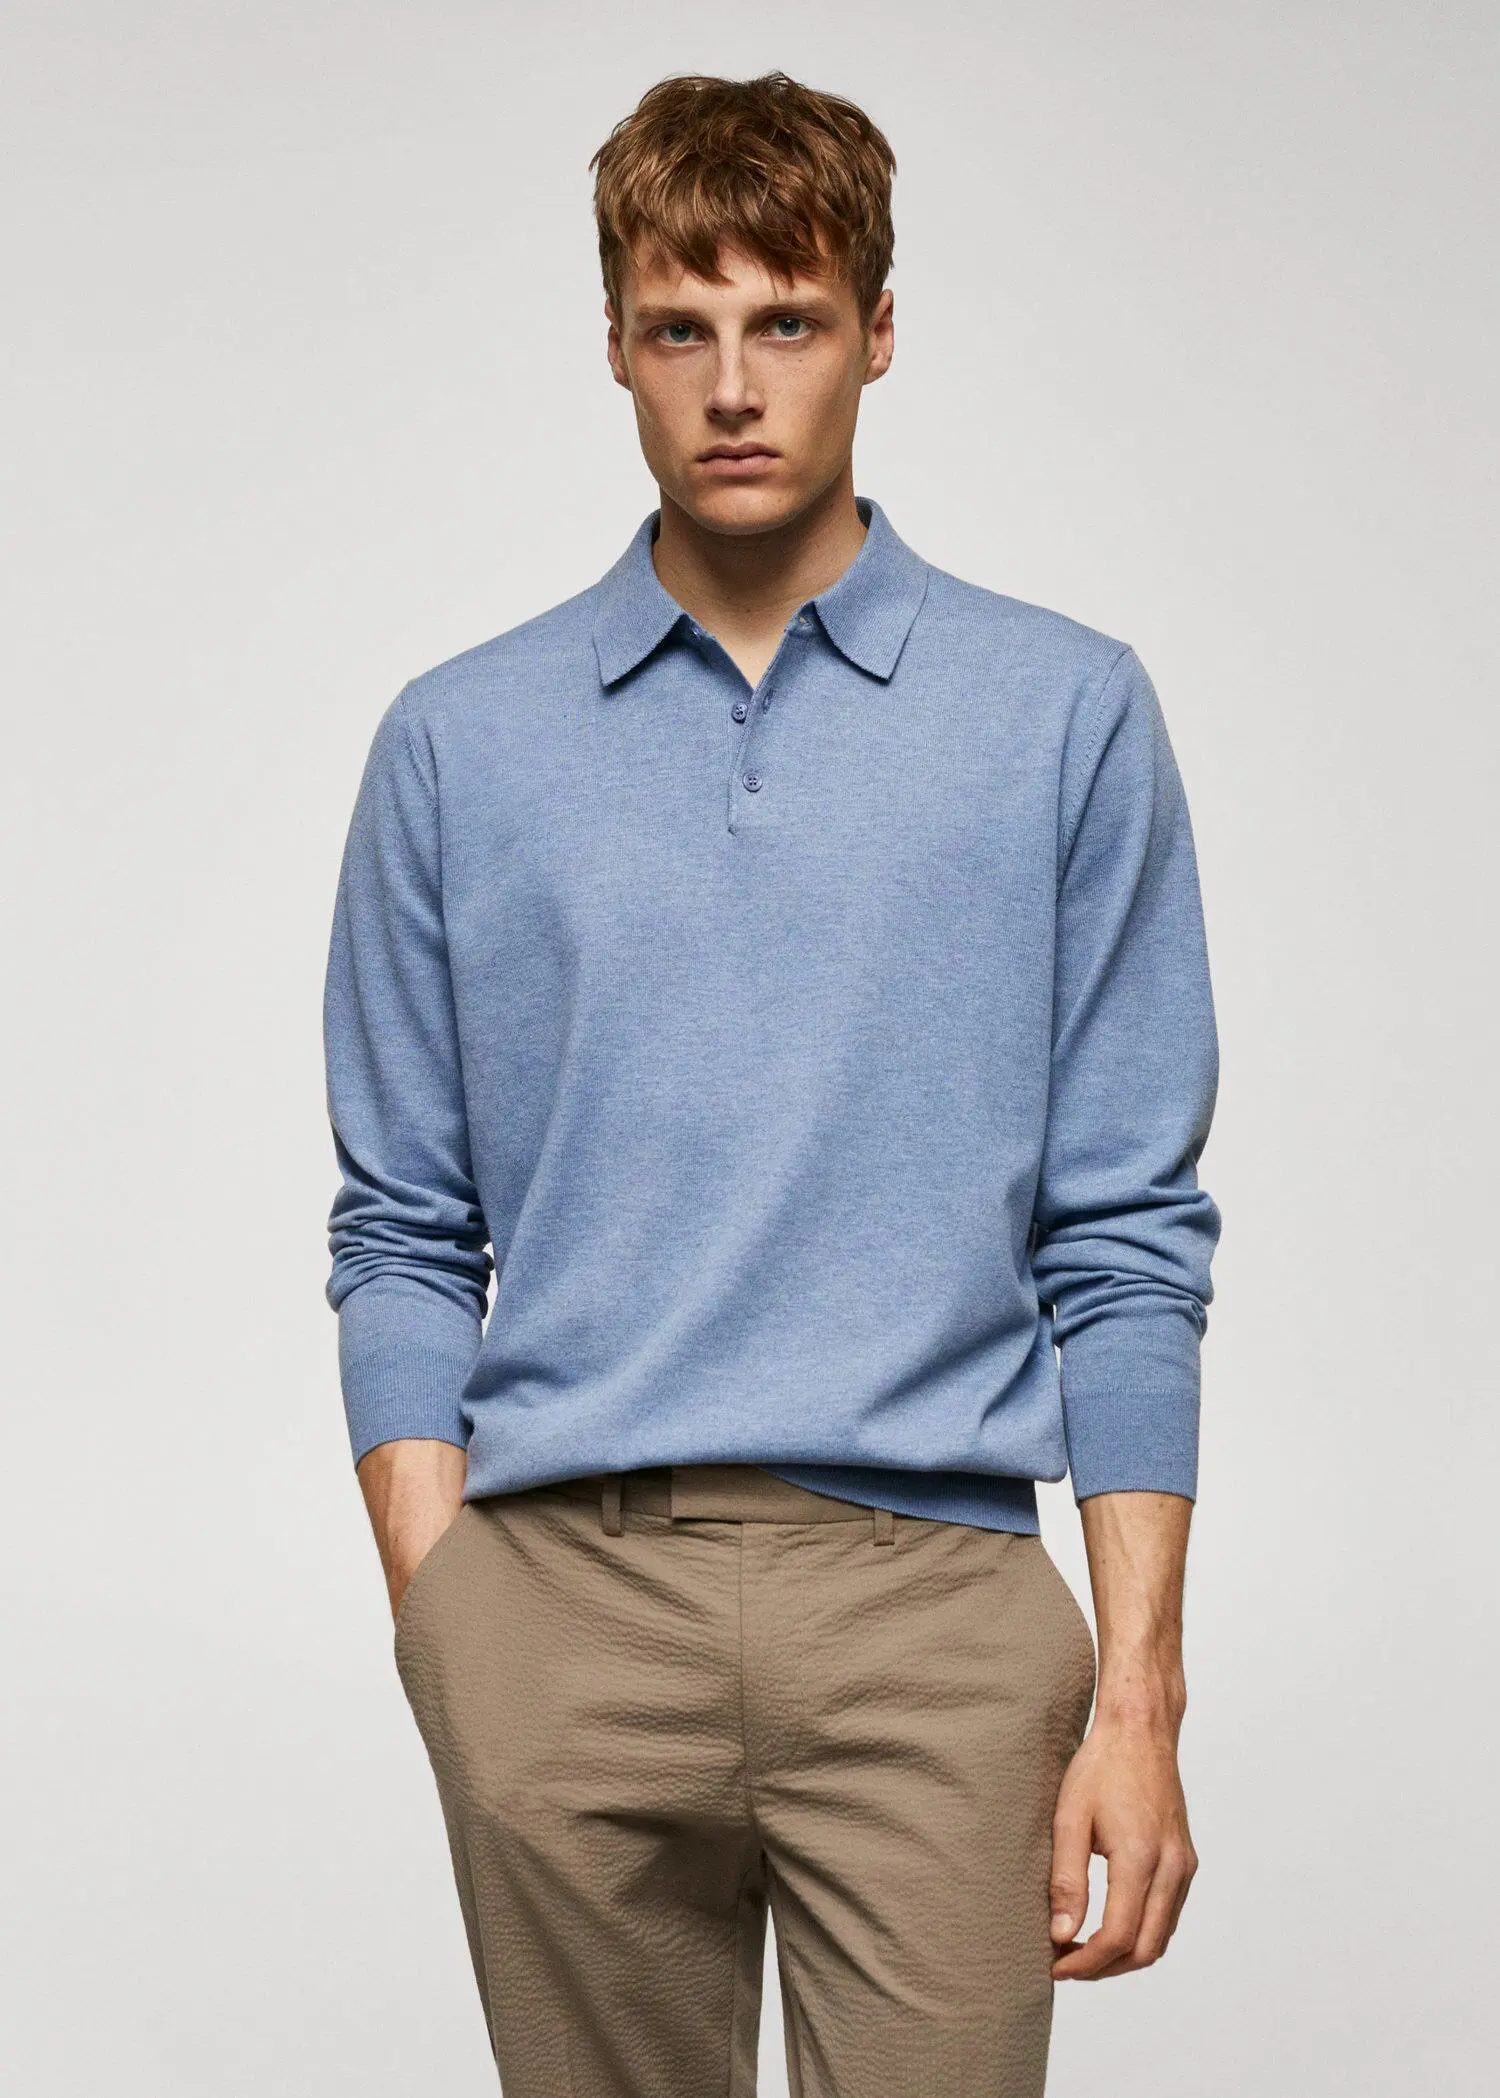 Mango Long-sleeved cotton jersey polo shirt. a man wearing a blue shirt and brown pants. 